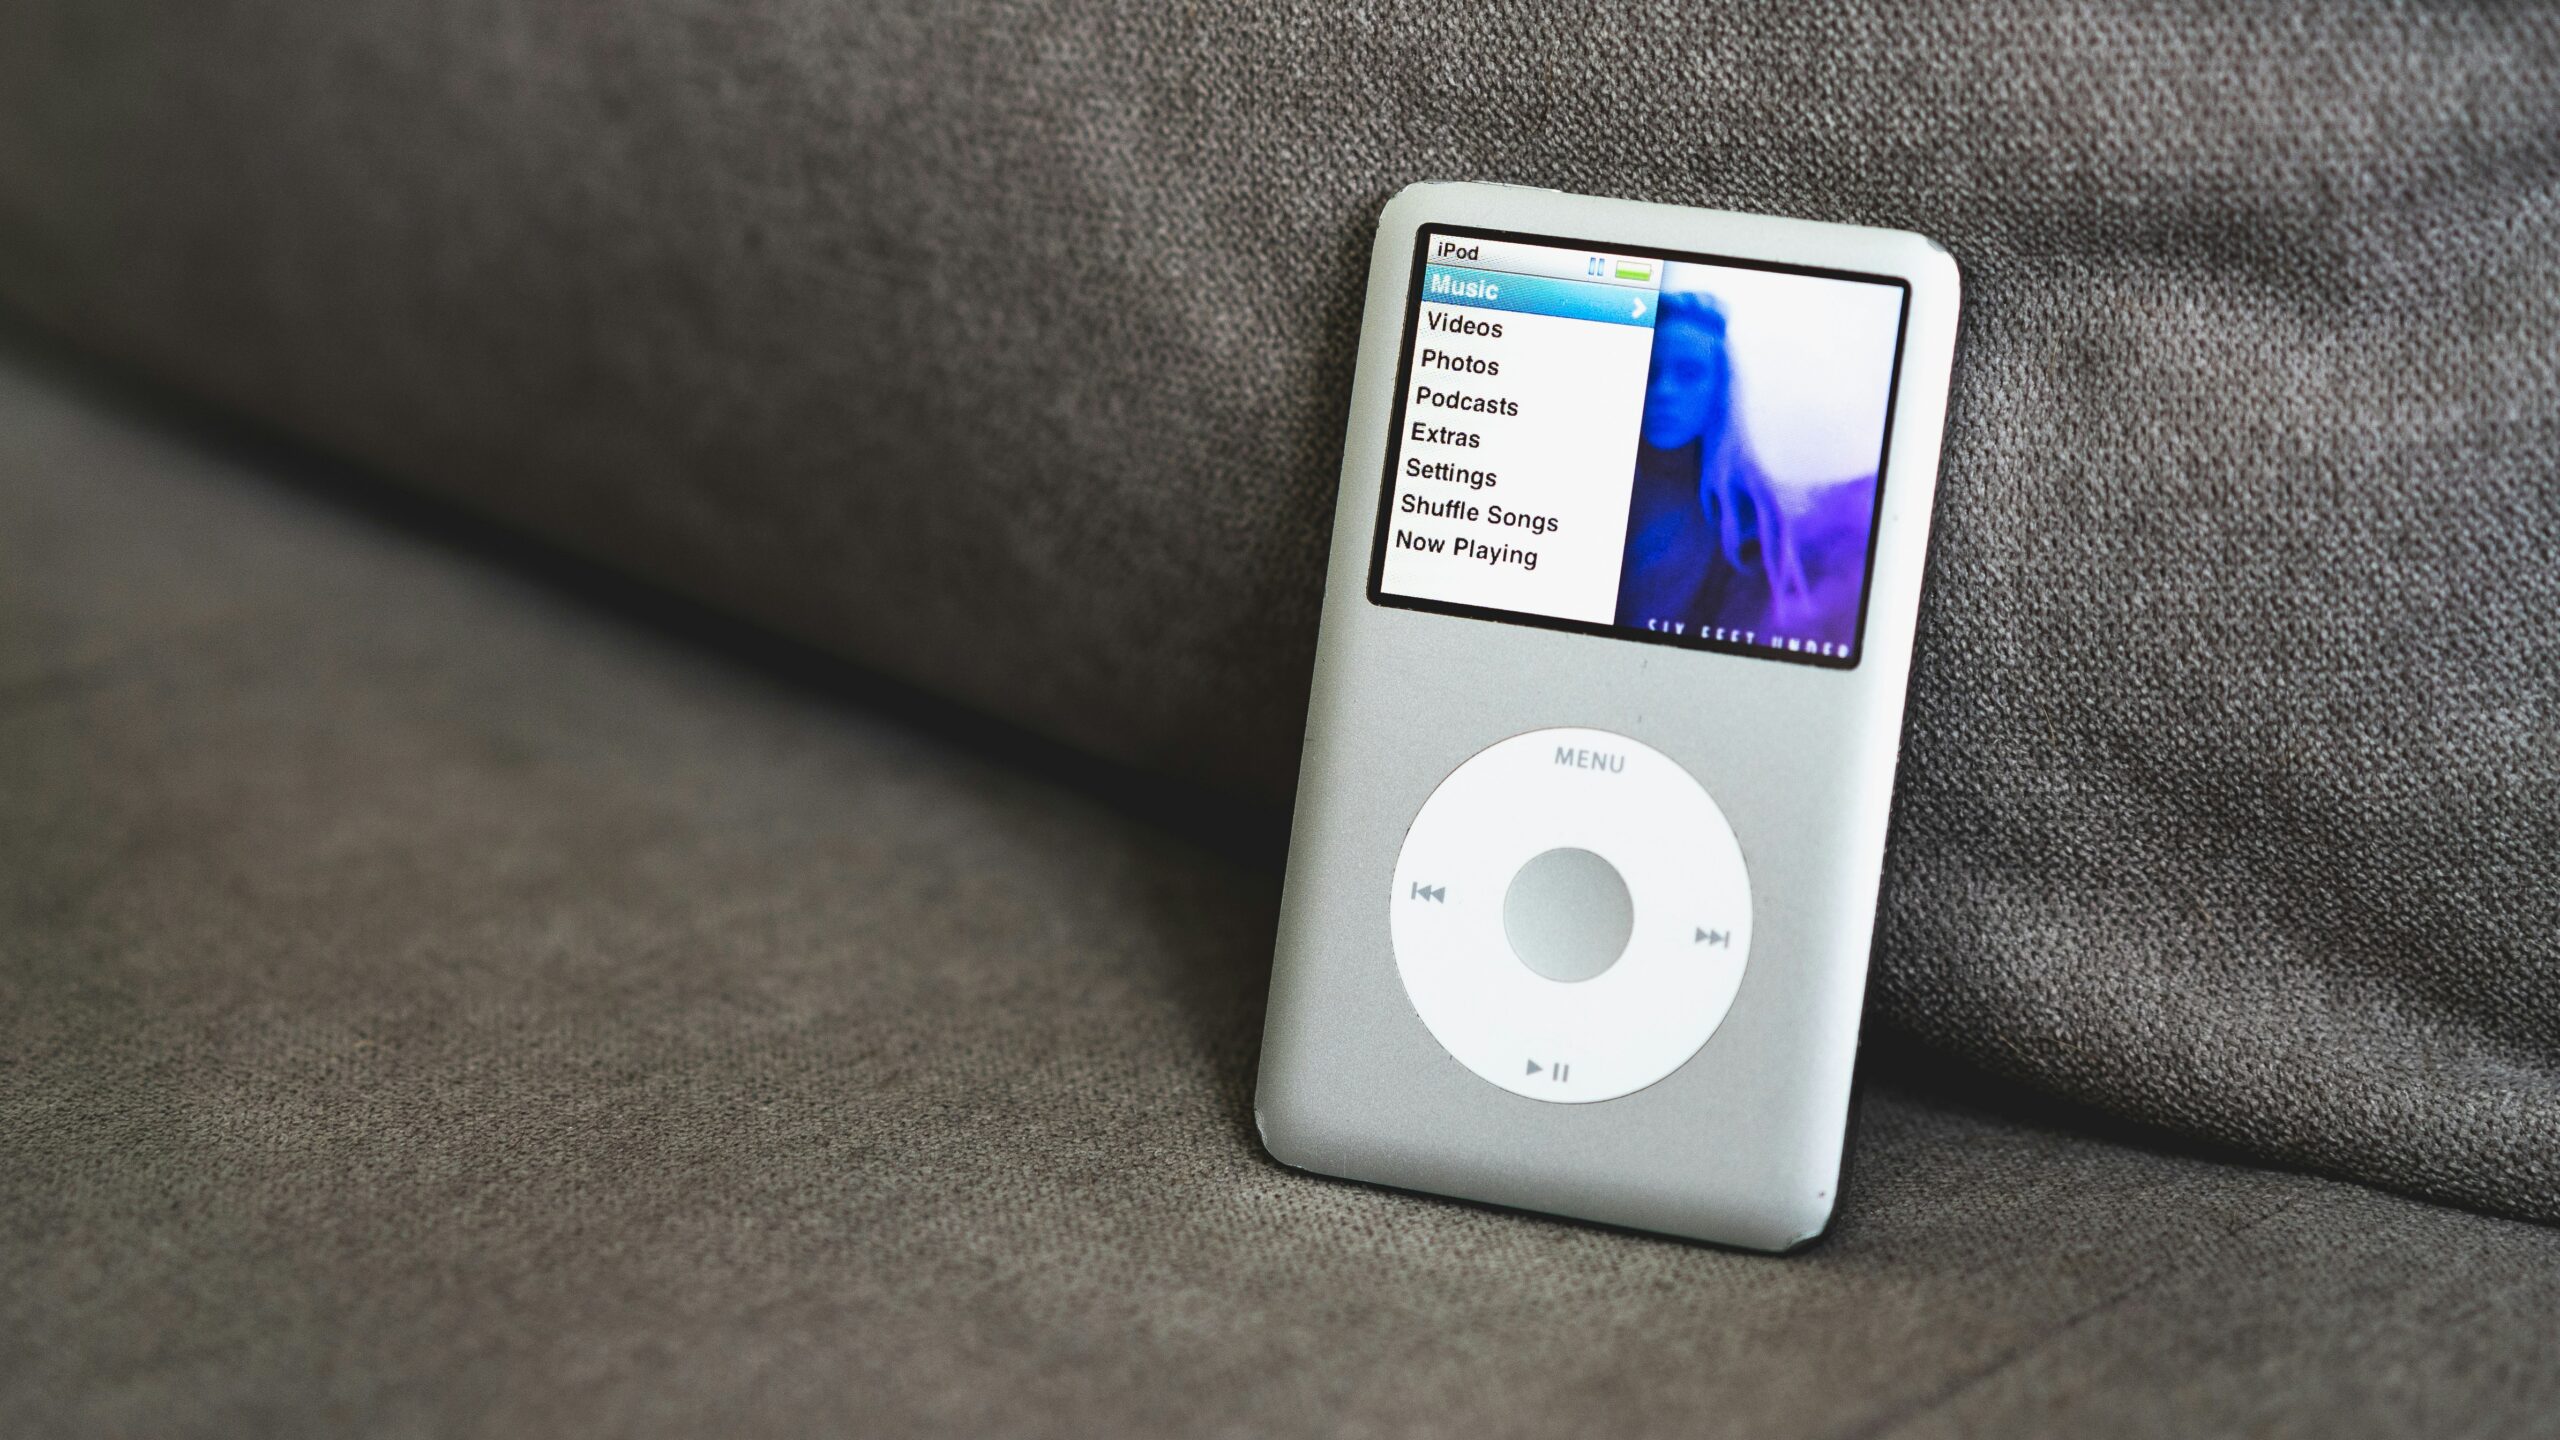 3. iPod Portable Music Player